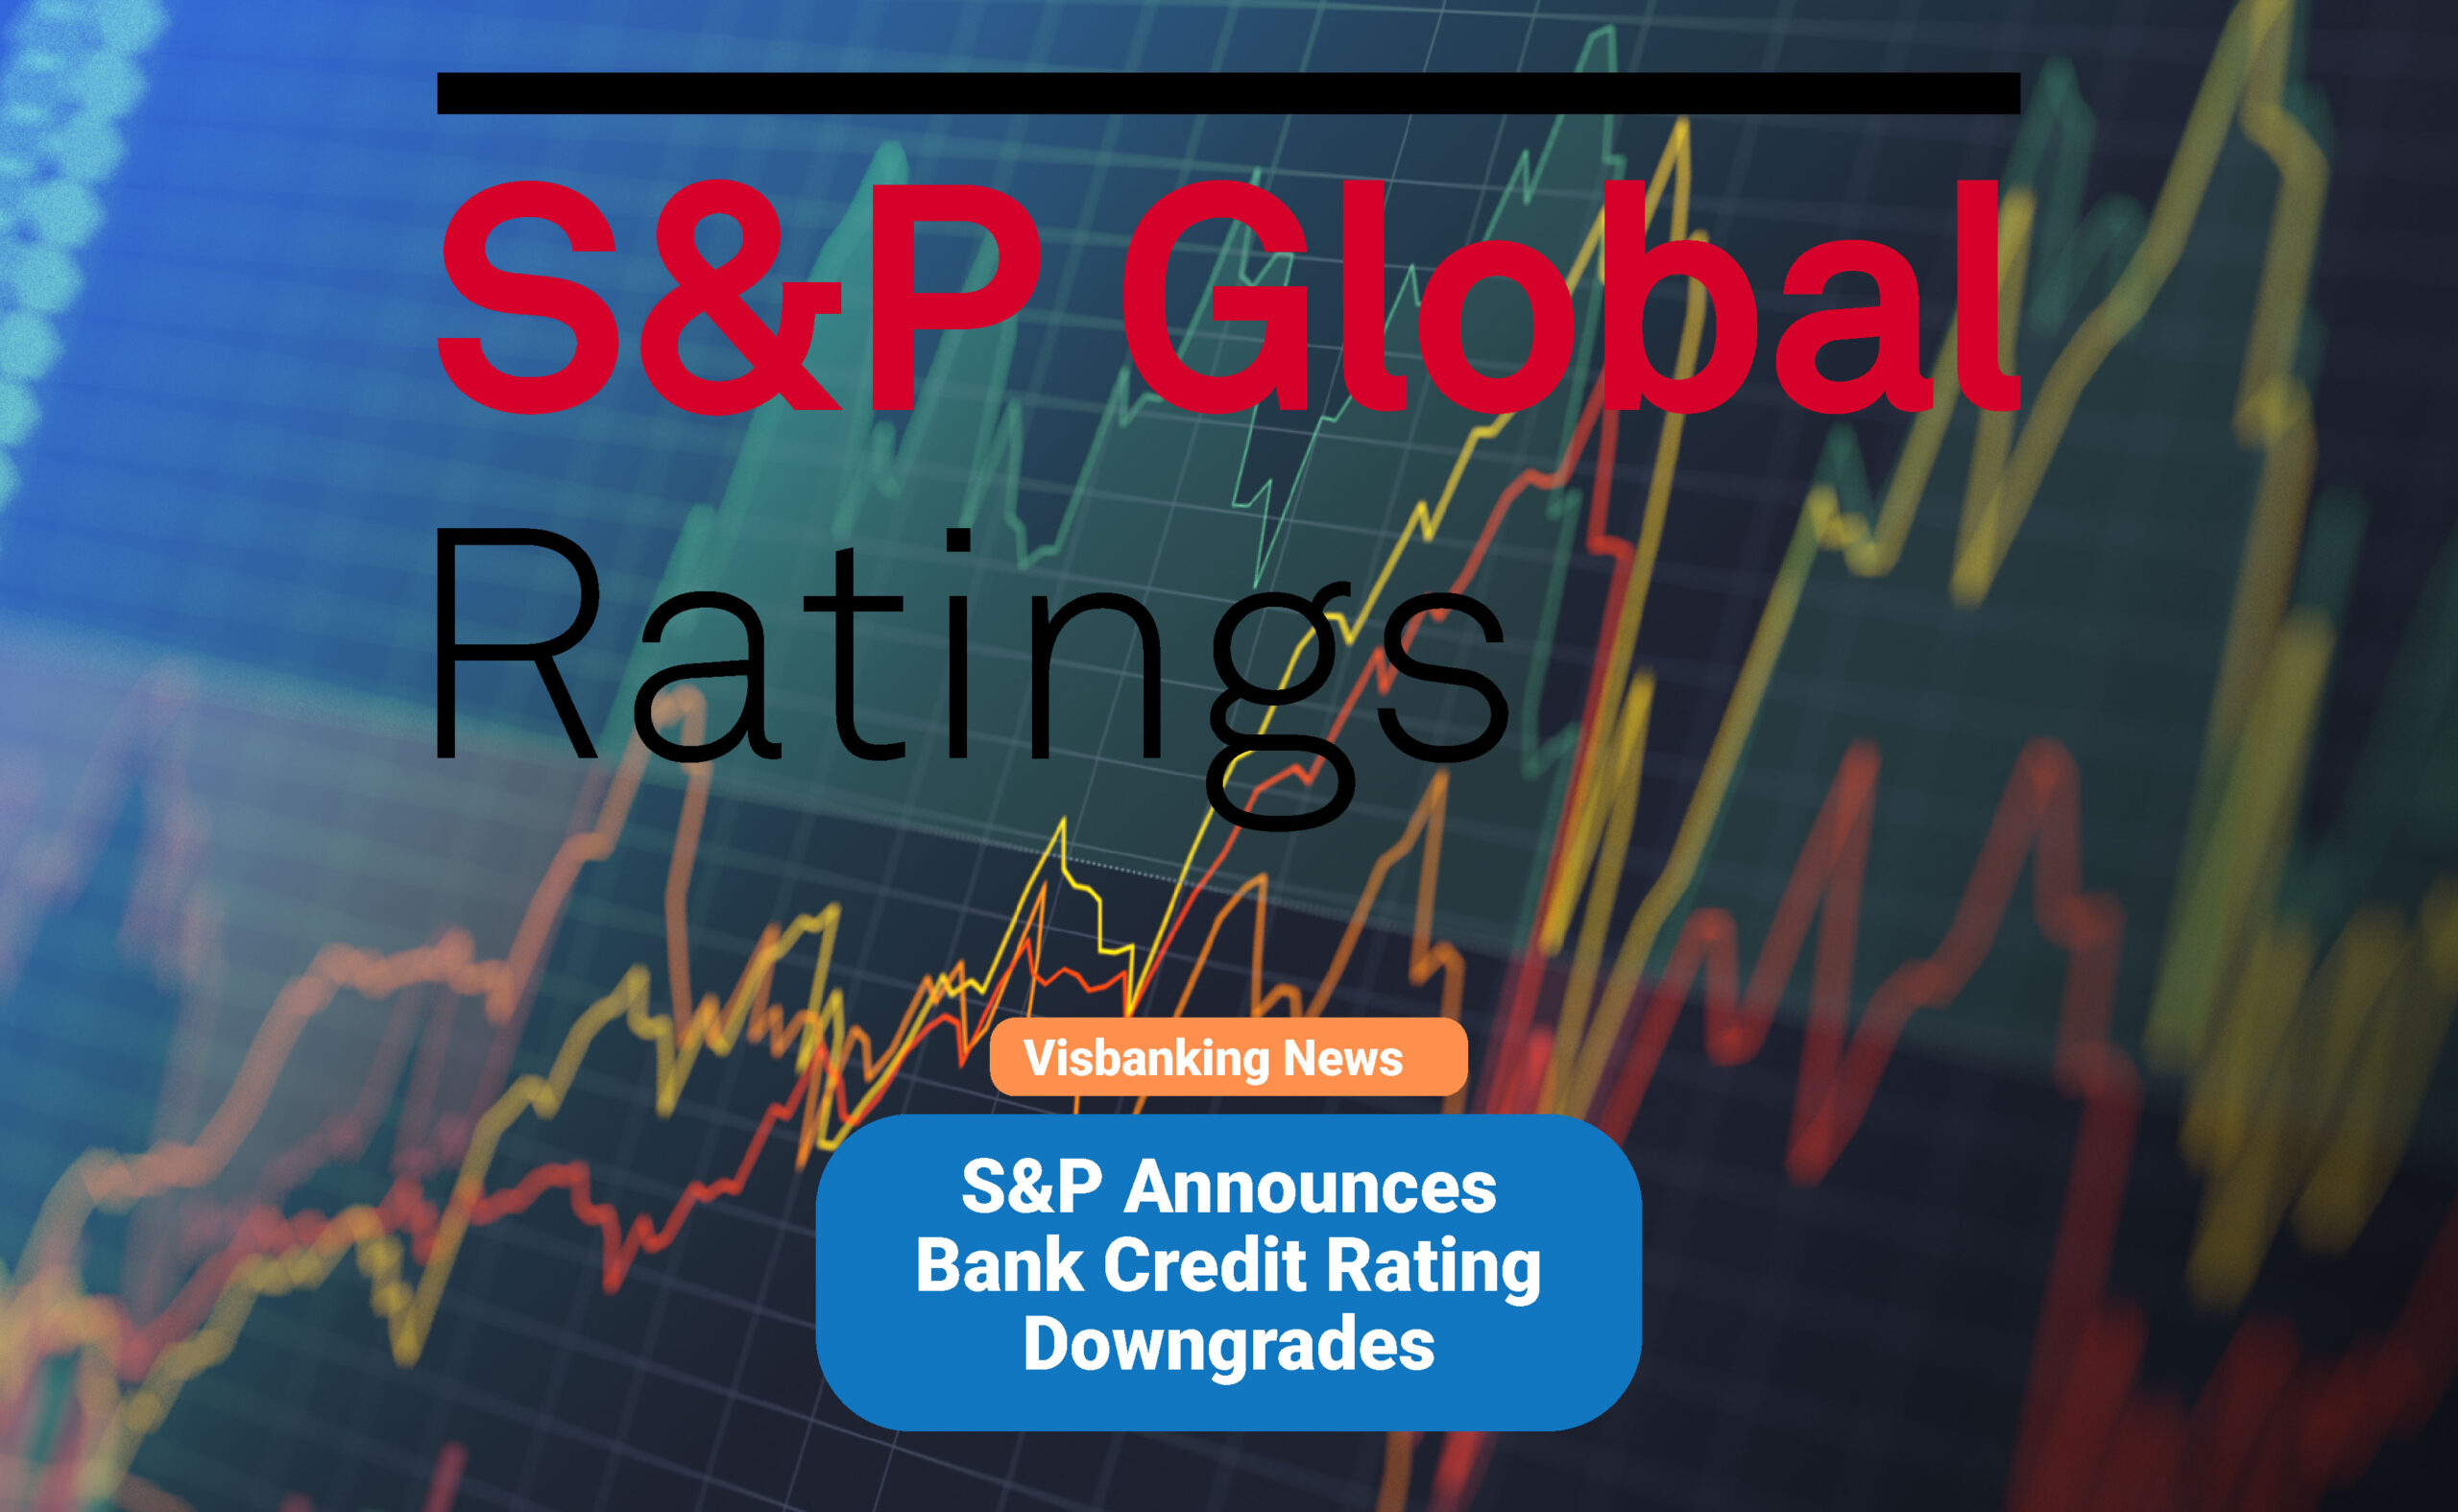 S&P Announces Bank Credit Rating Downgrades